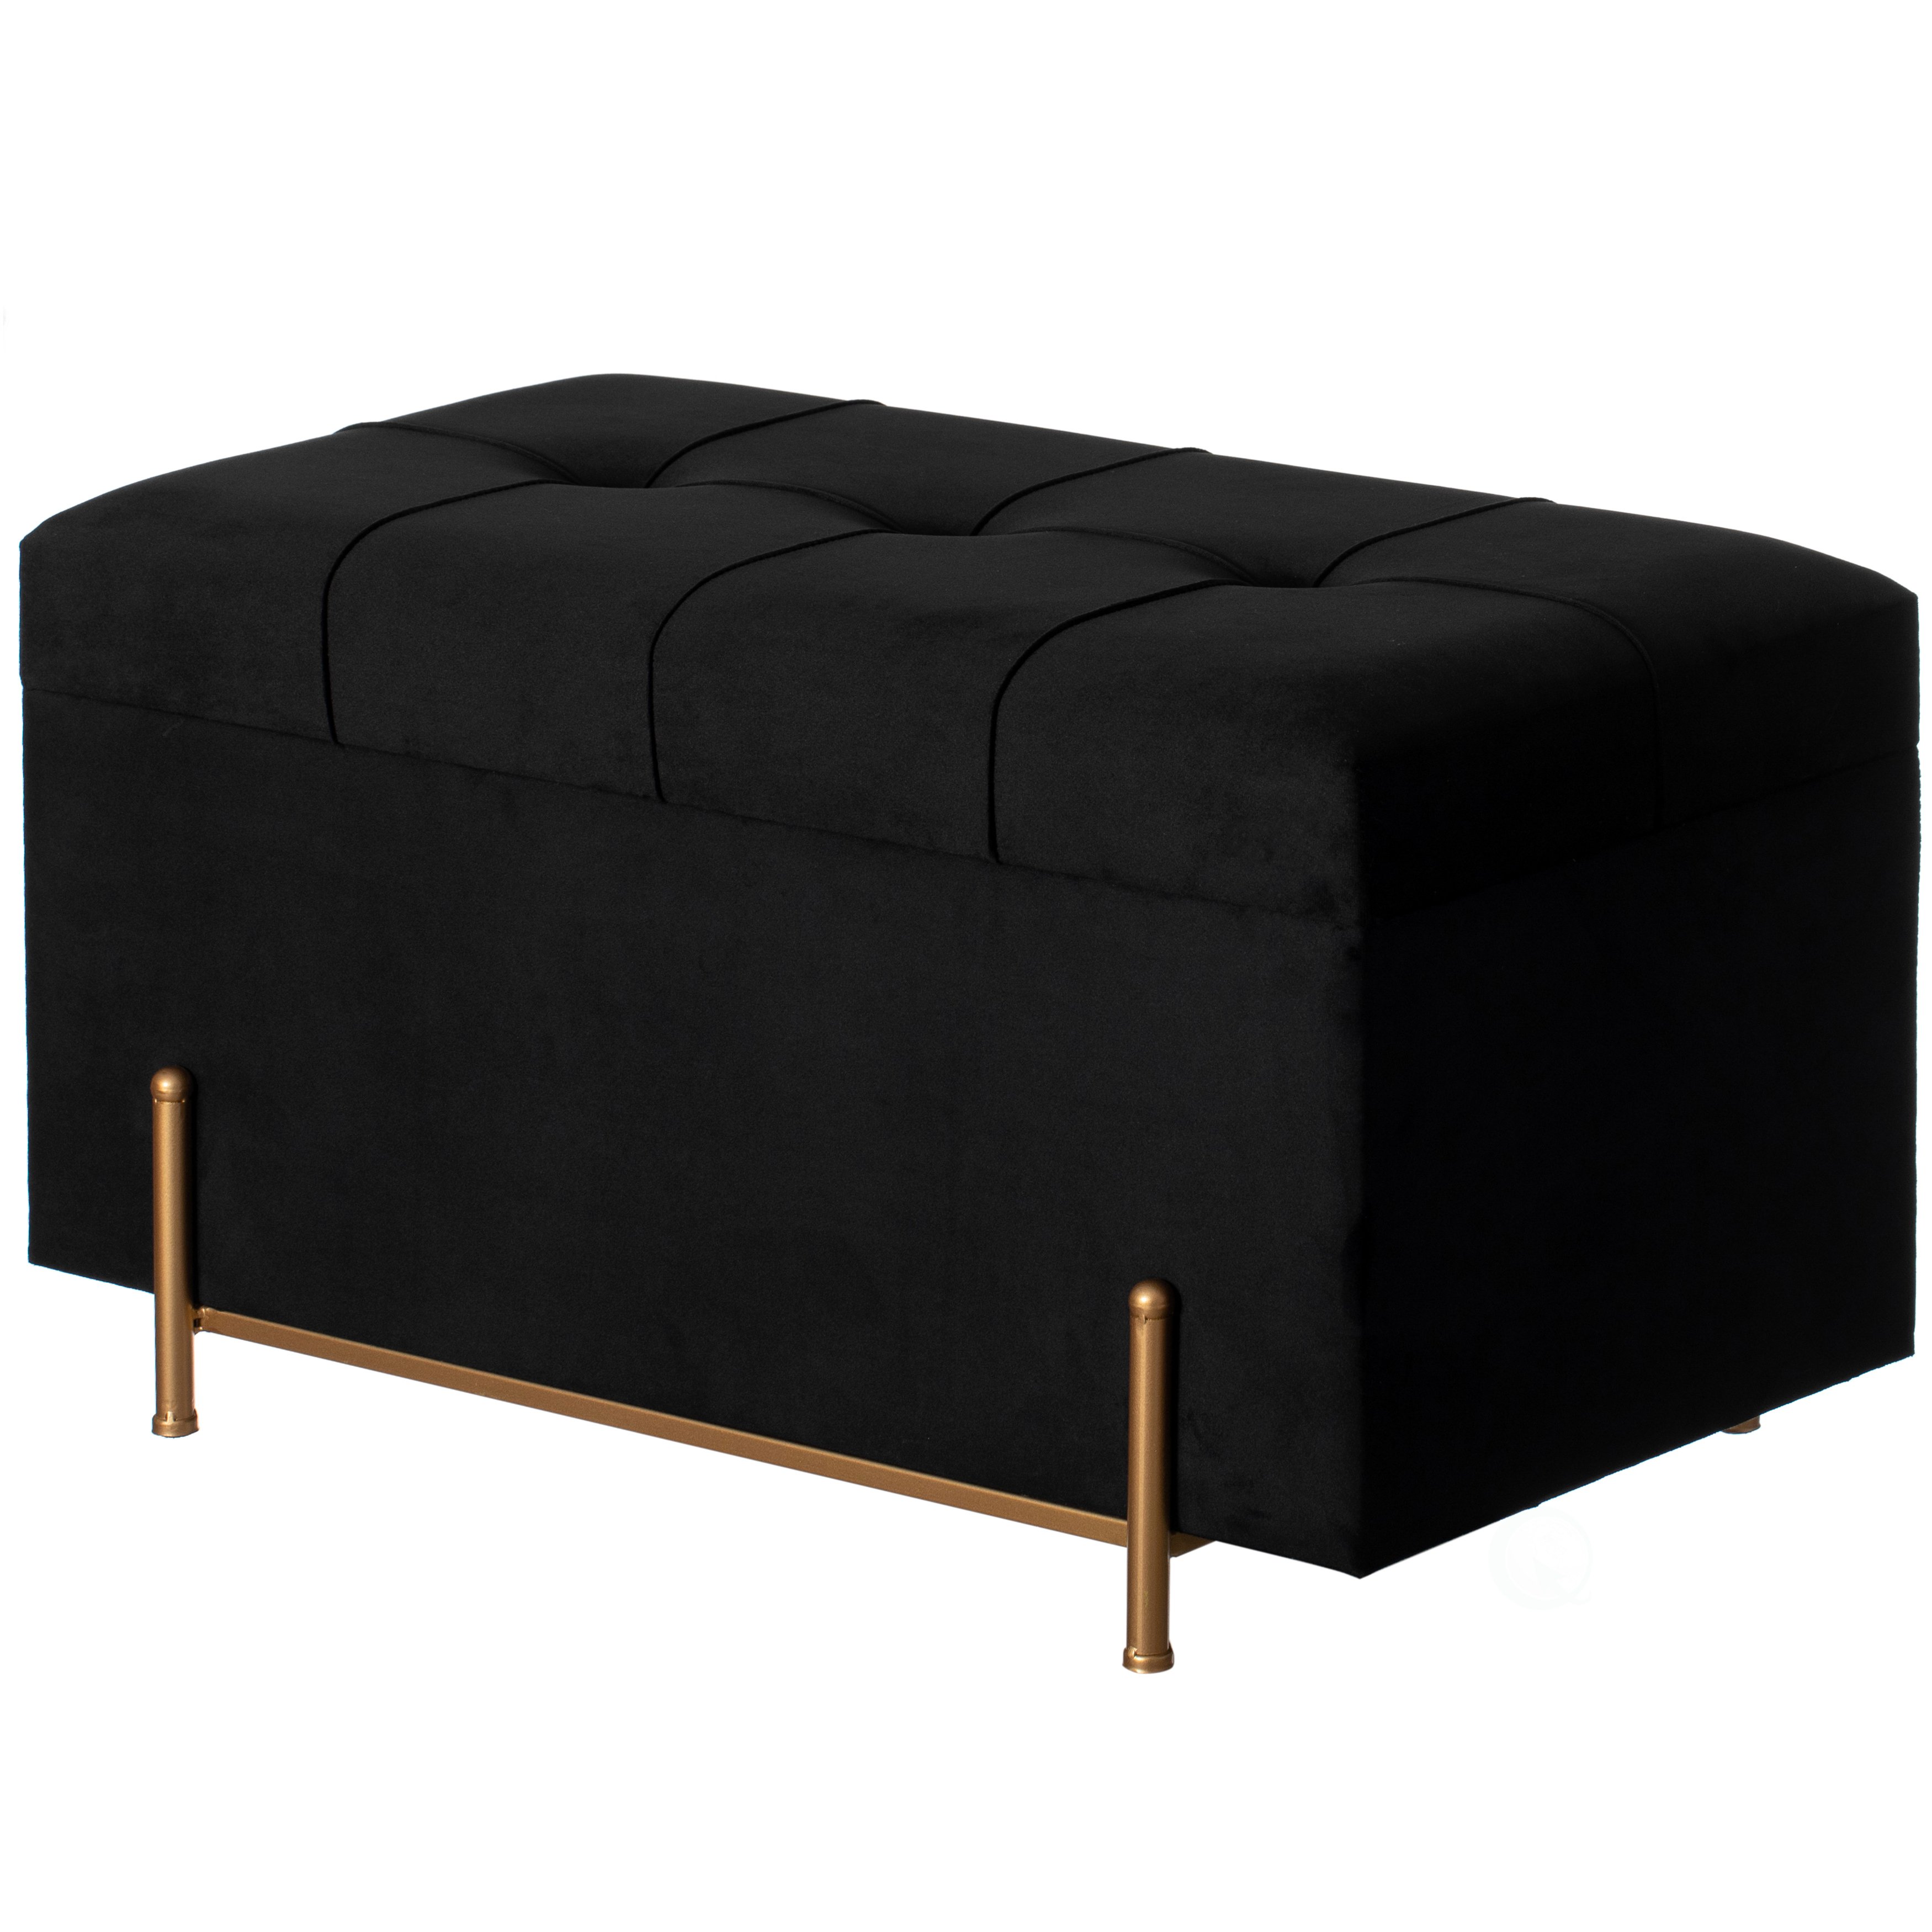 Large Rectangle Velvet Storage Ottoman Stool Box with Golden Legs Decorative Sitting Bench for Living Room Home Decor - Black